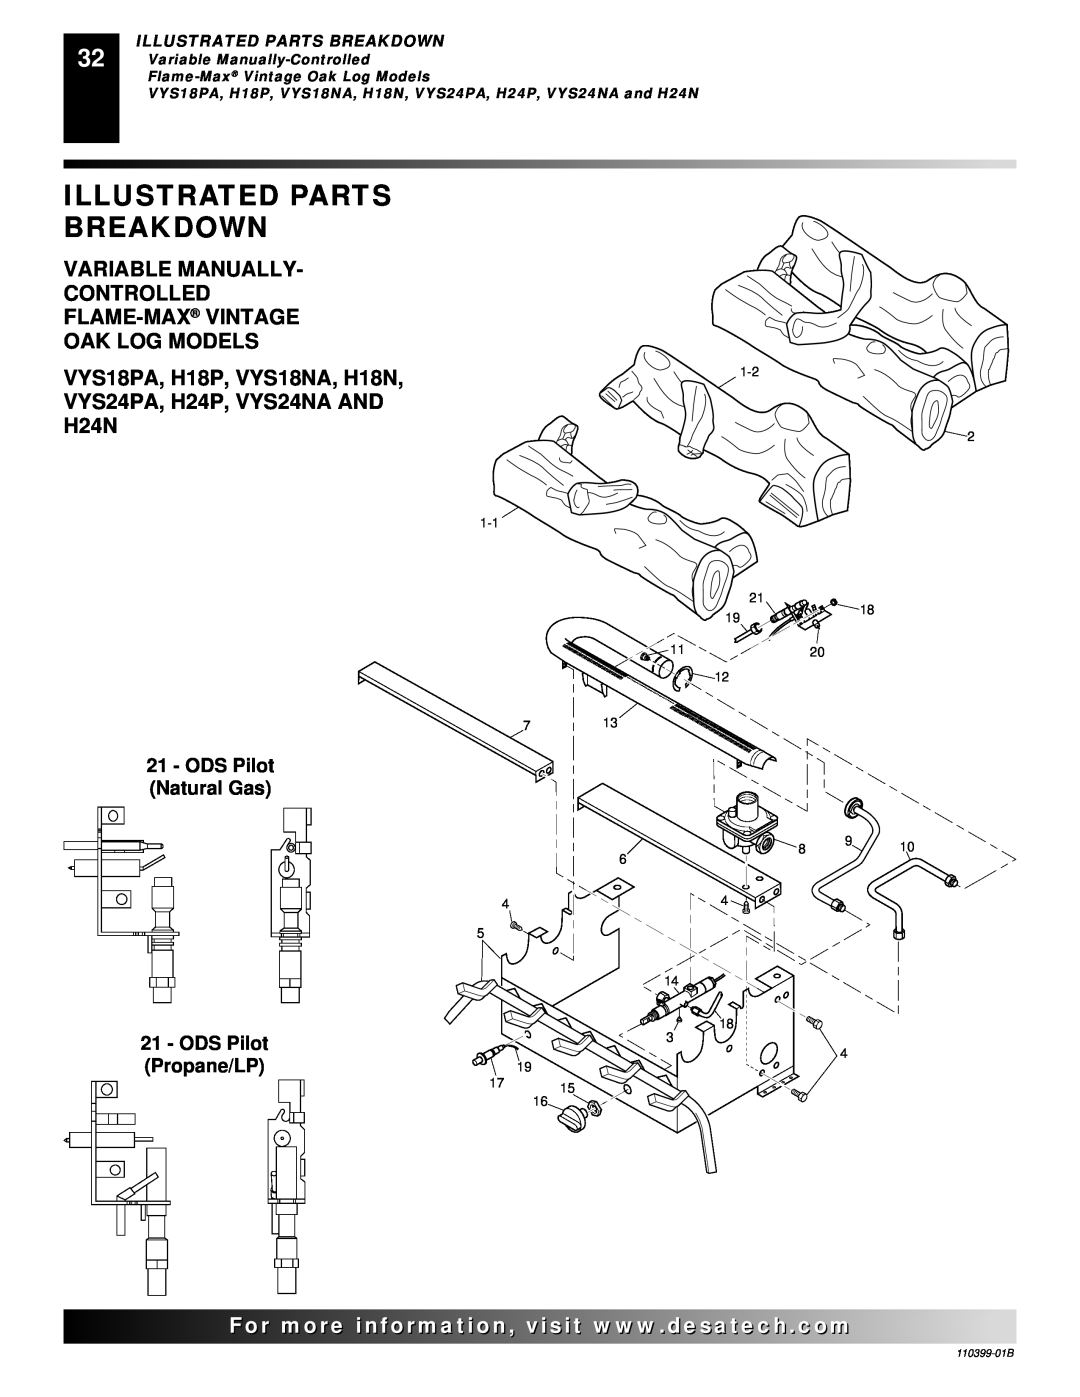 Desa FLAME-MAX VintageOak Illustrated Parts Breakdown, Variable Manually Controlled Flame-Max Vintage, Oak Log Models 